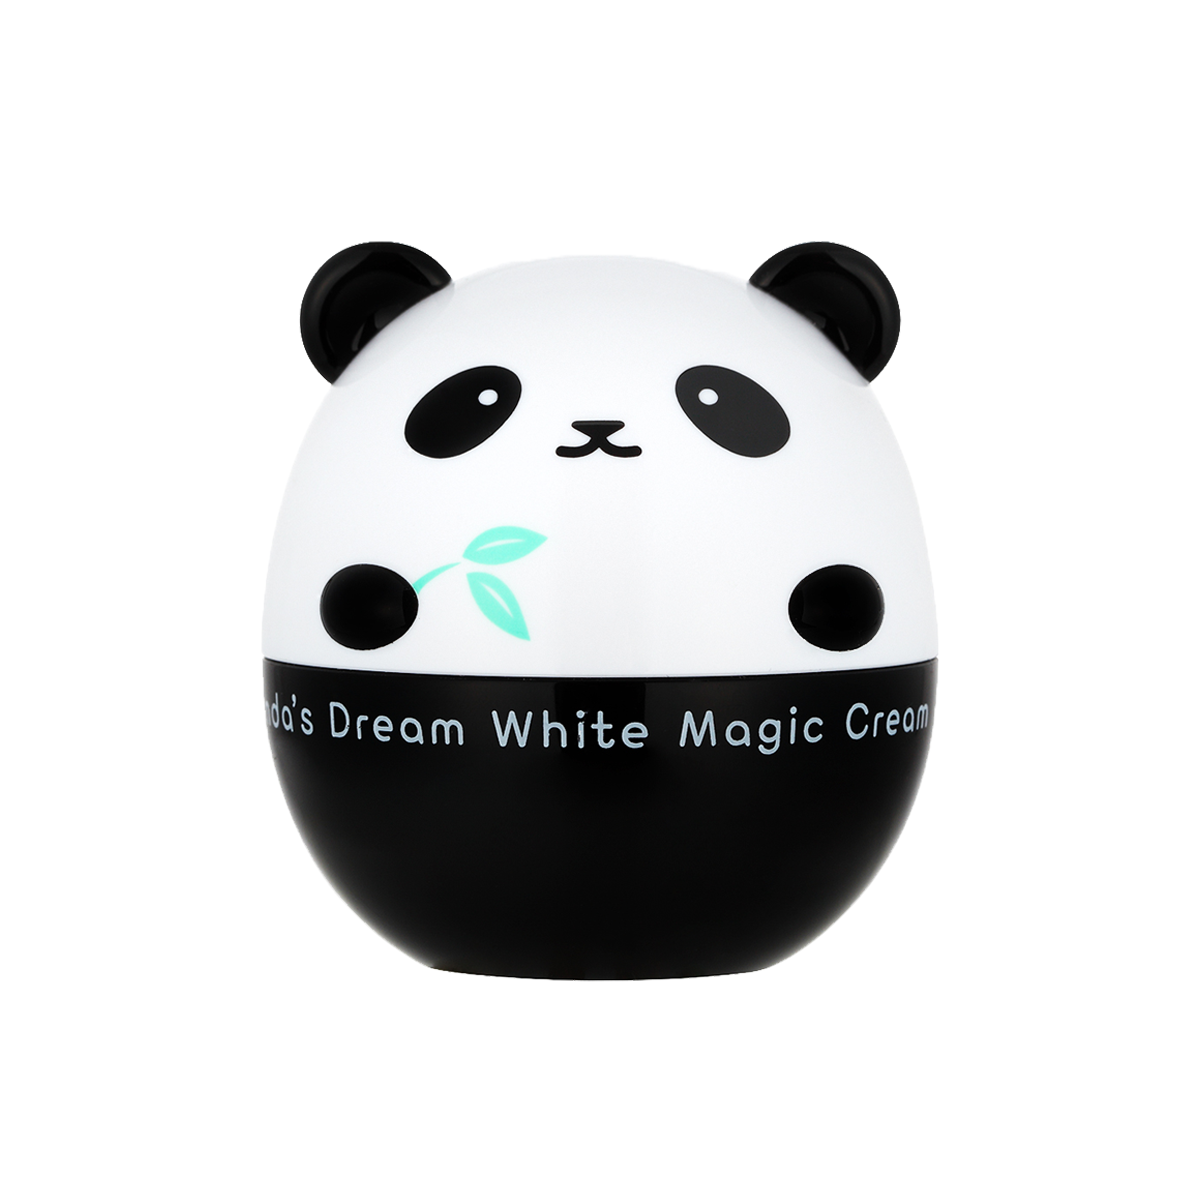 Productie Verhoogd omdraaien Panda's Dream White Magic Cream